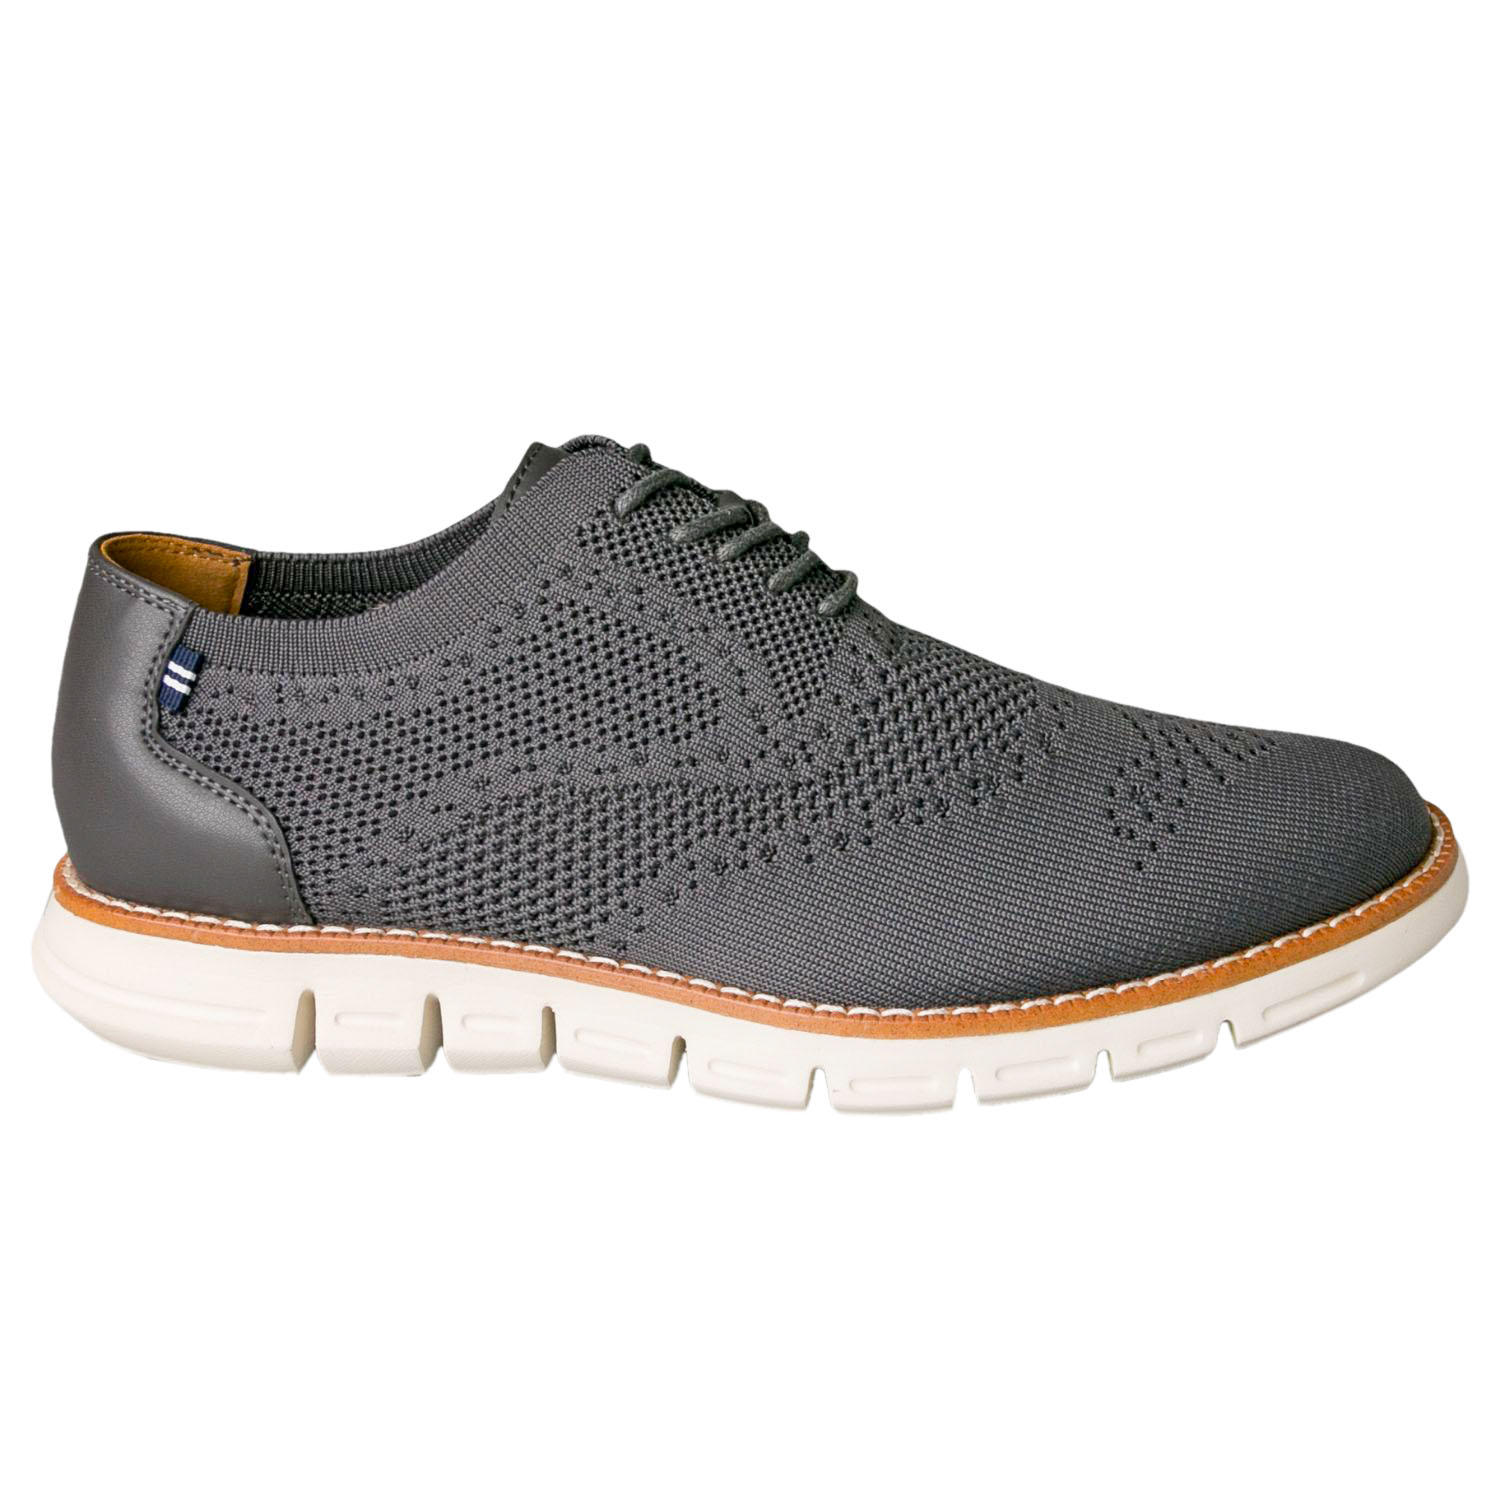 Nautica Men's Casual Oxford Shoe, Grey, Size 10 | eBay